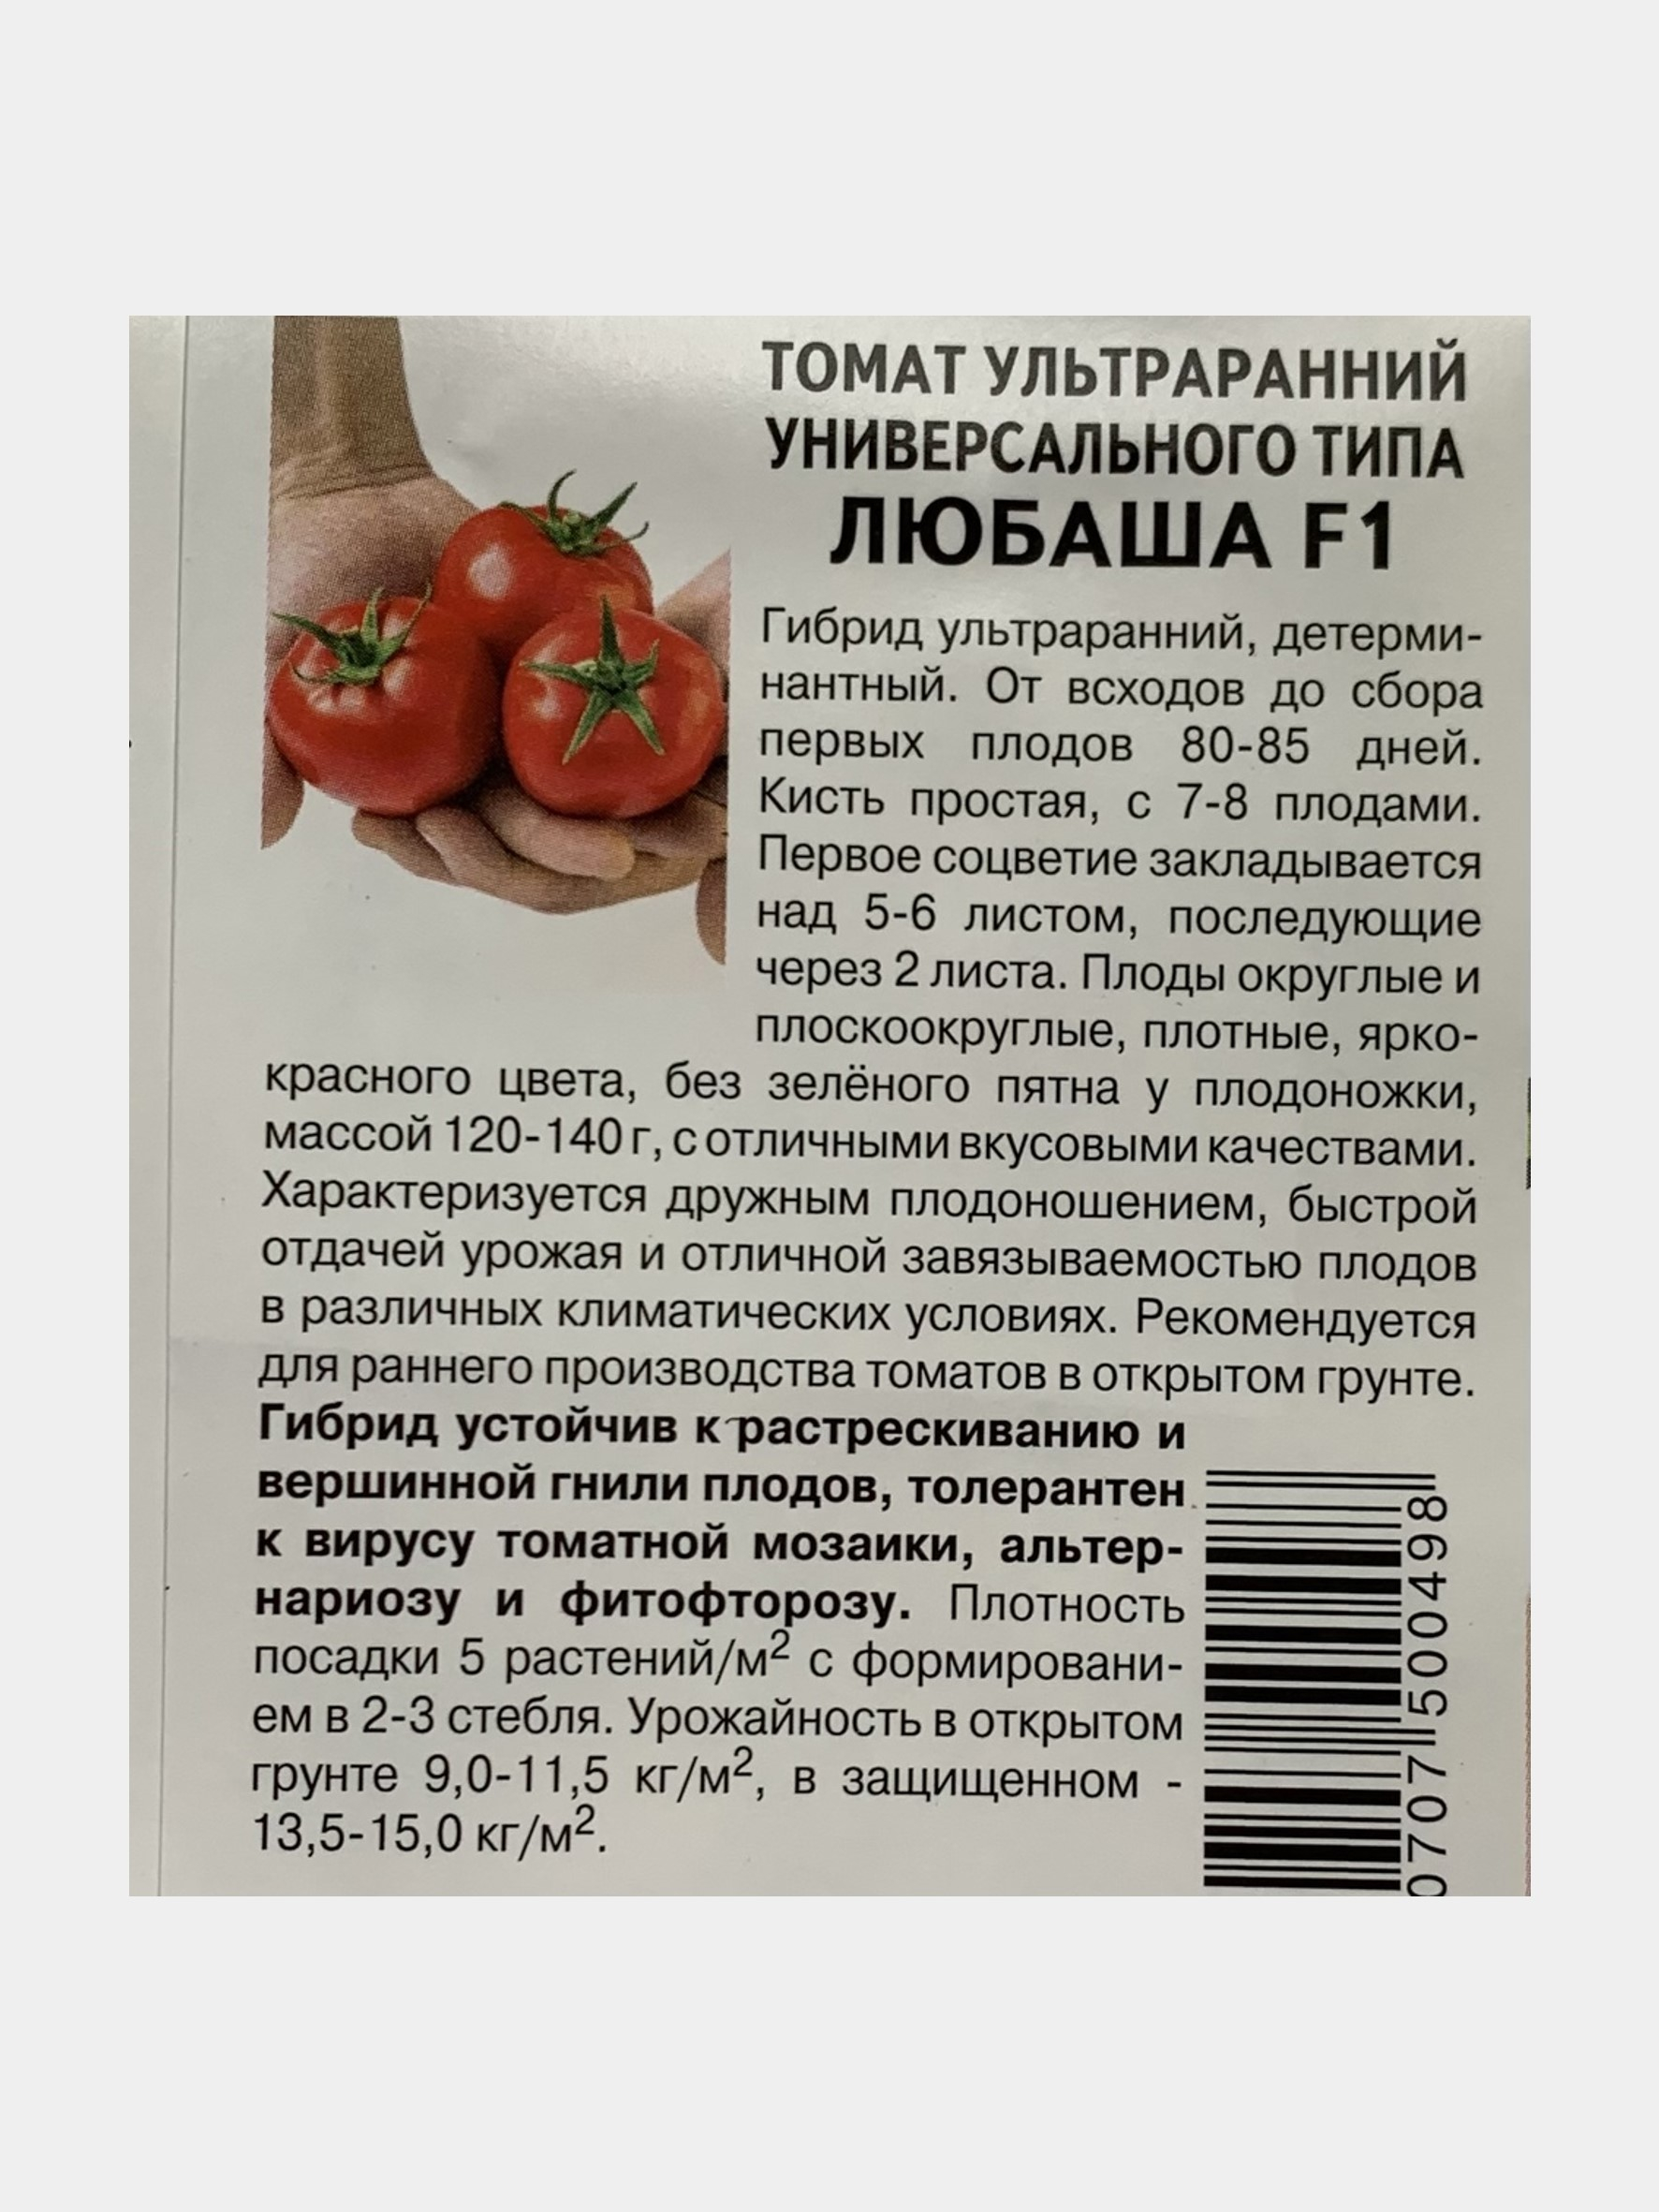 Сорт томатов Любаша лирика